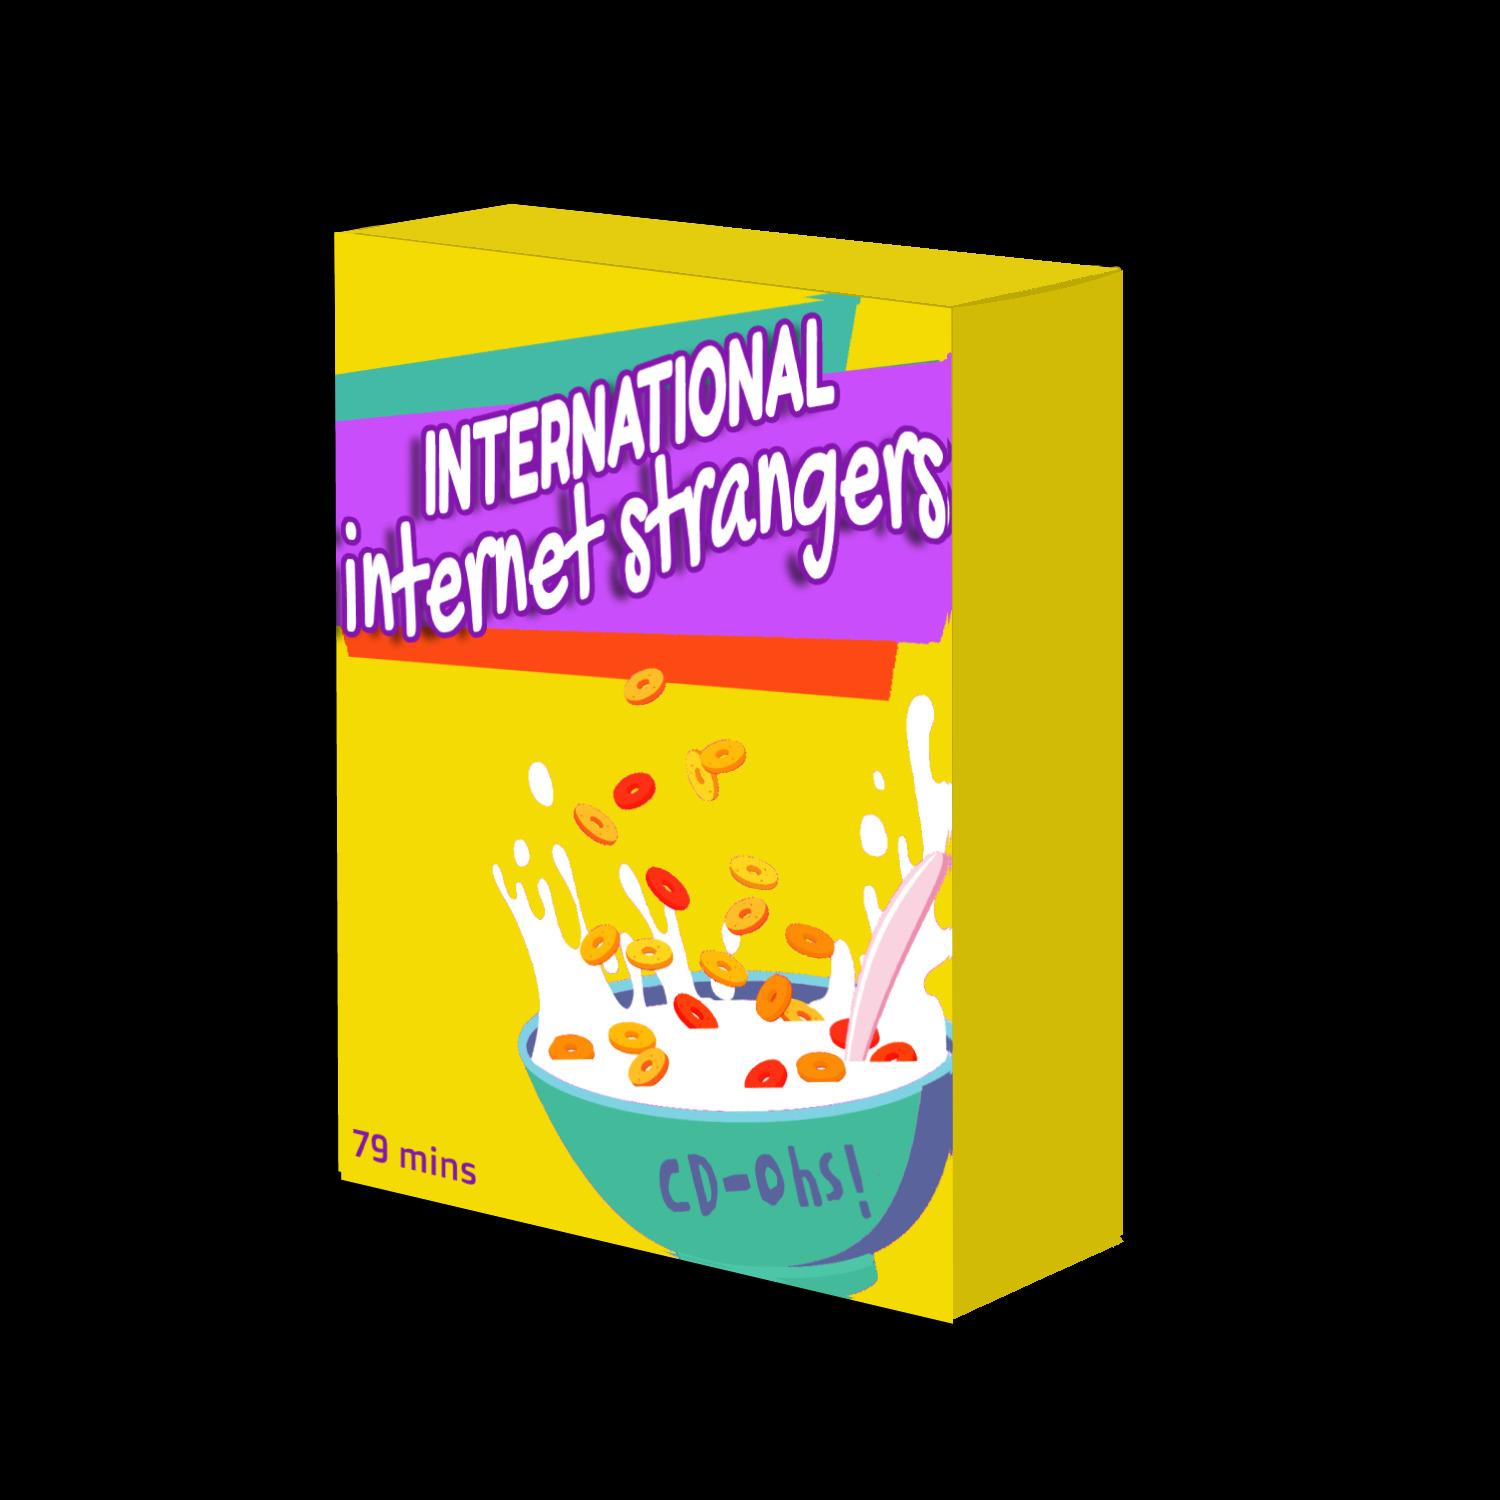 International Internet Strangers